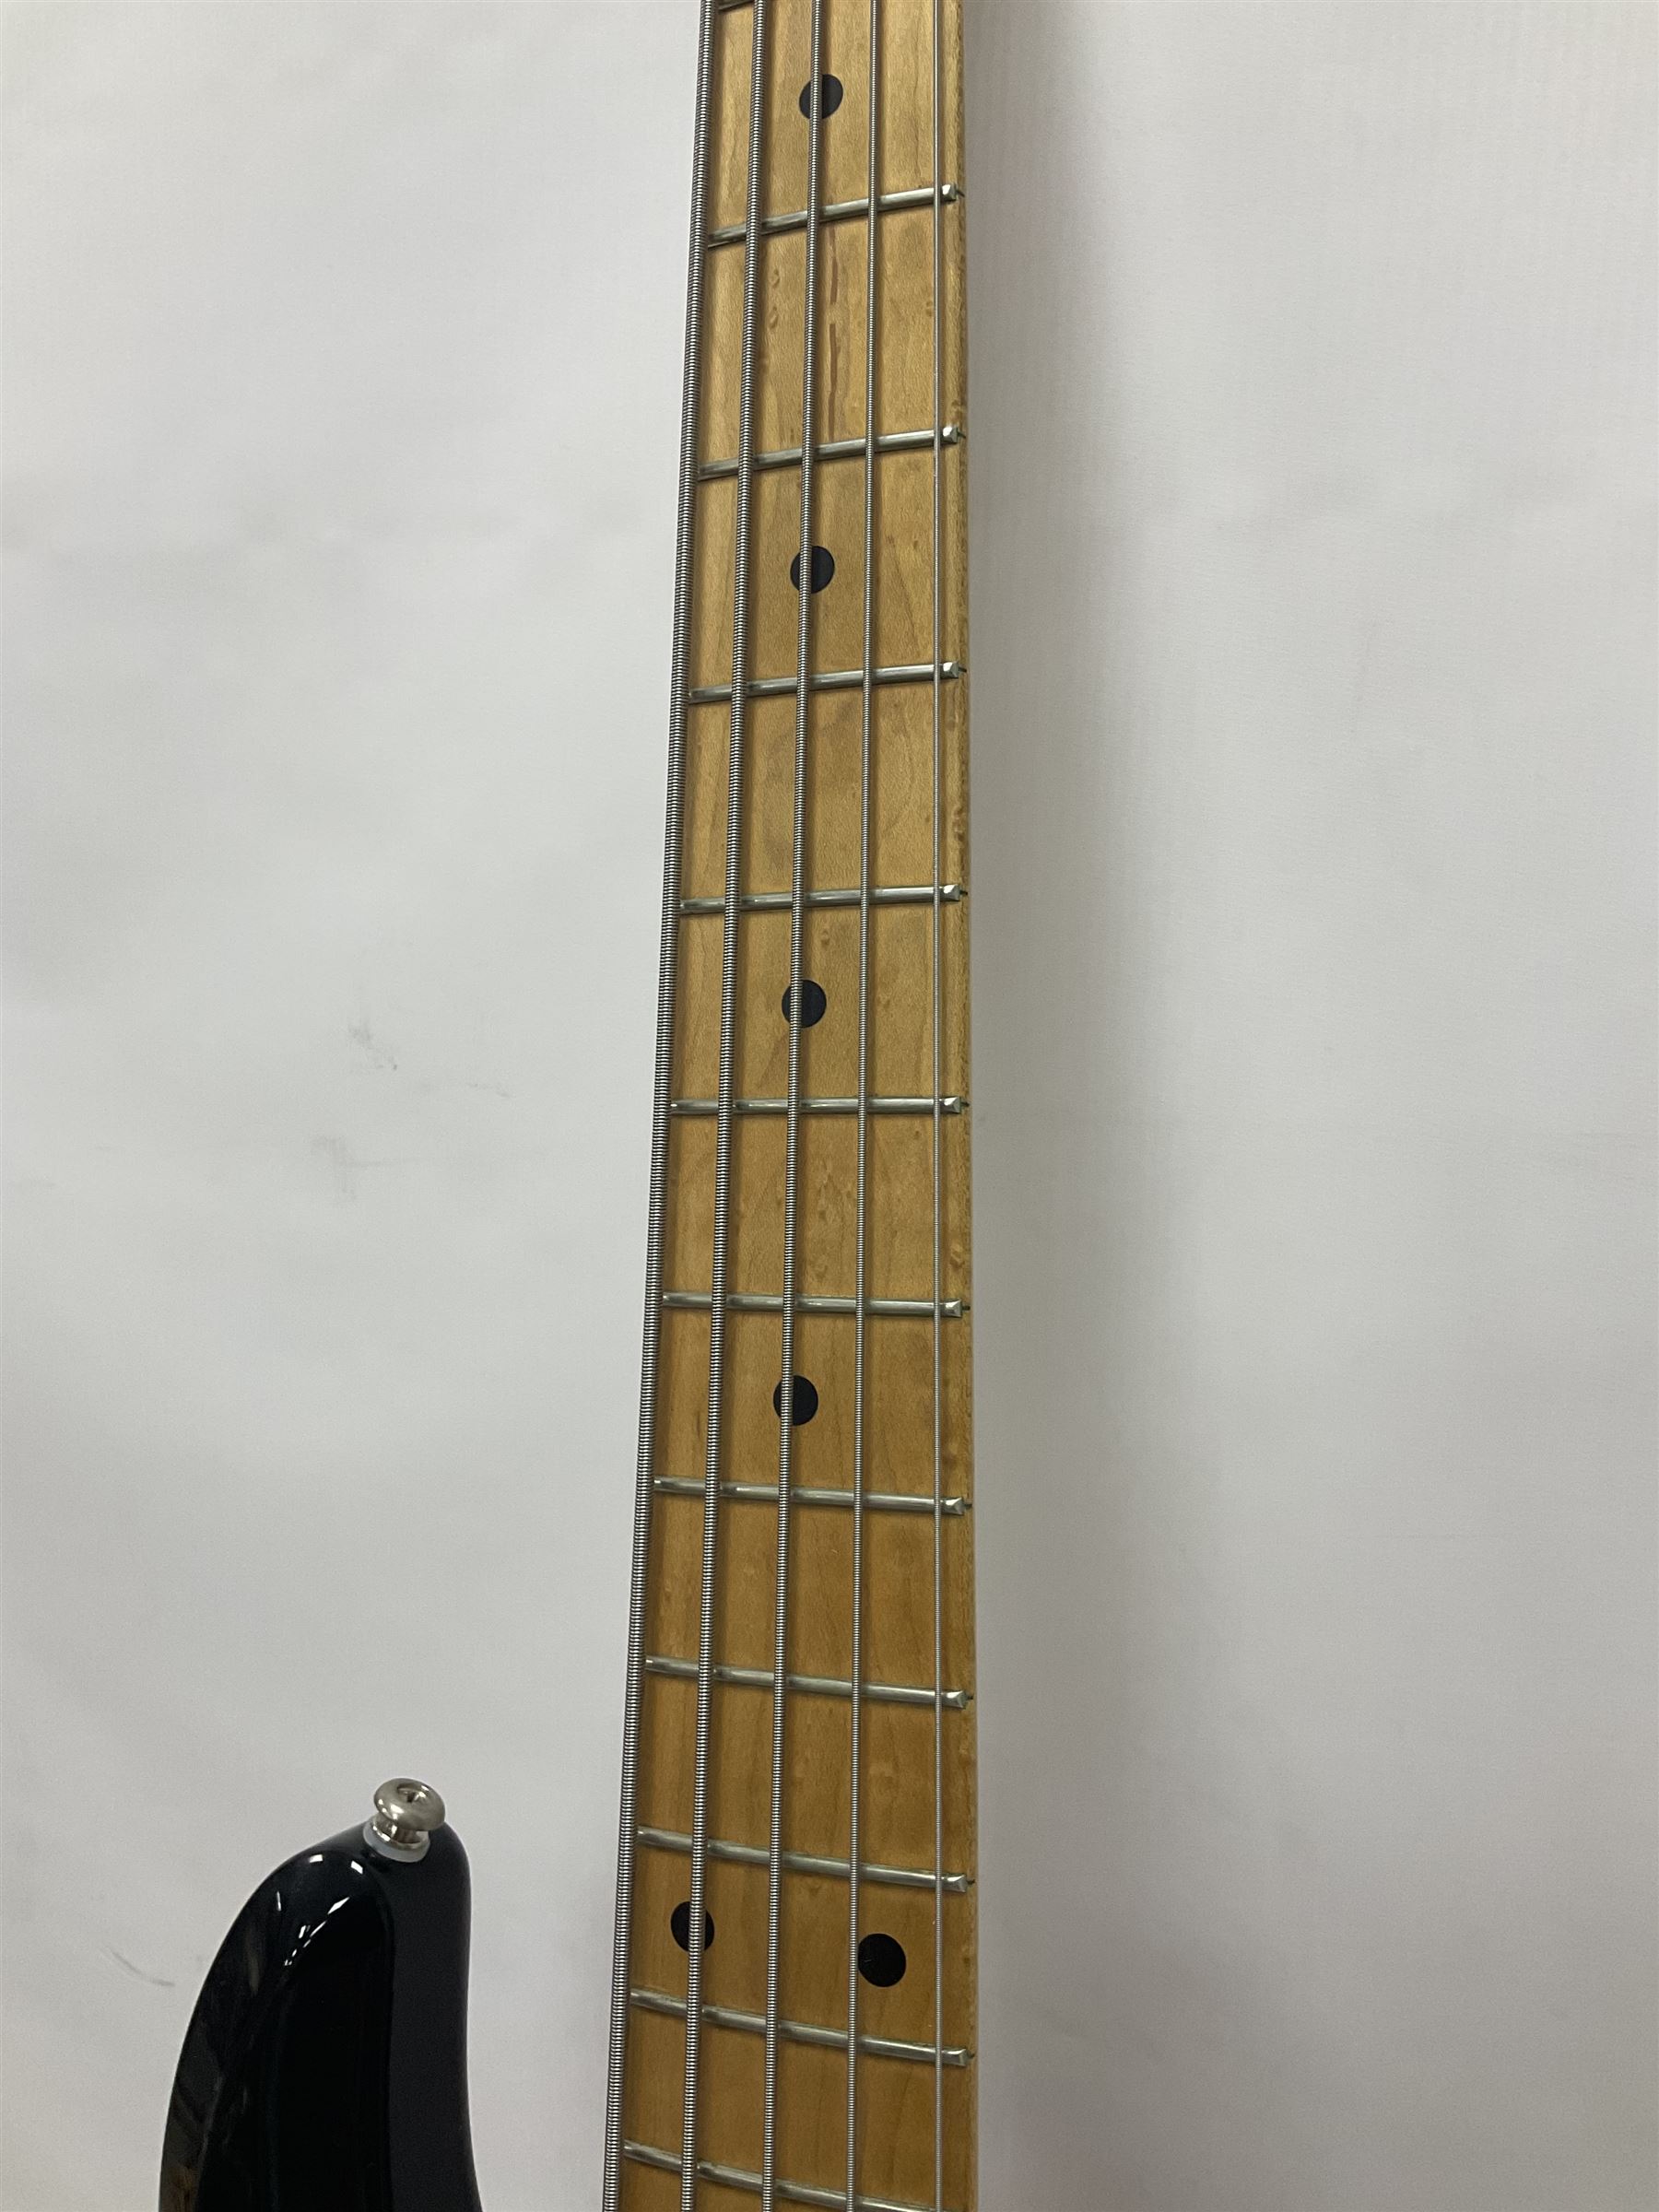 Ernie Ball Music Man Sting Ray 5 string bass guitar - Image 10 of 19